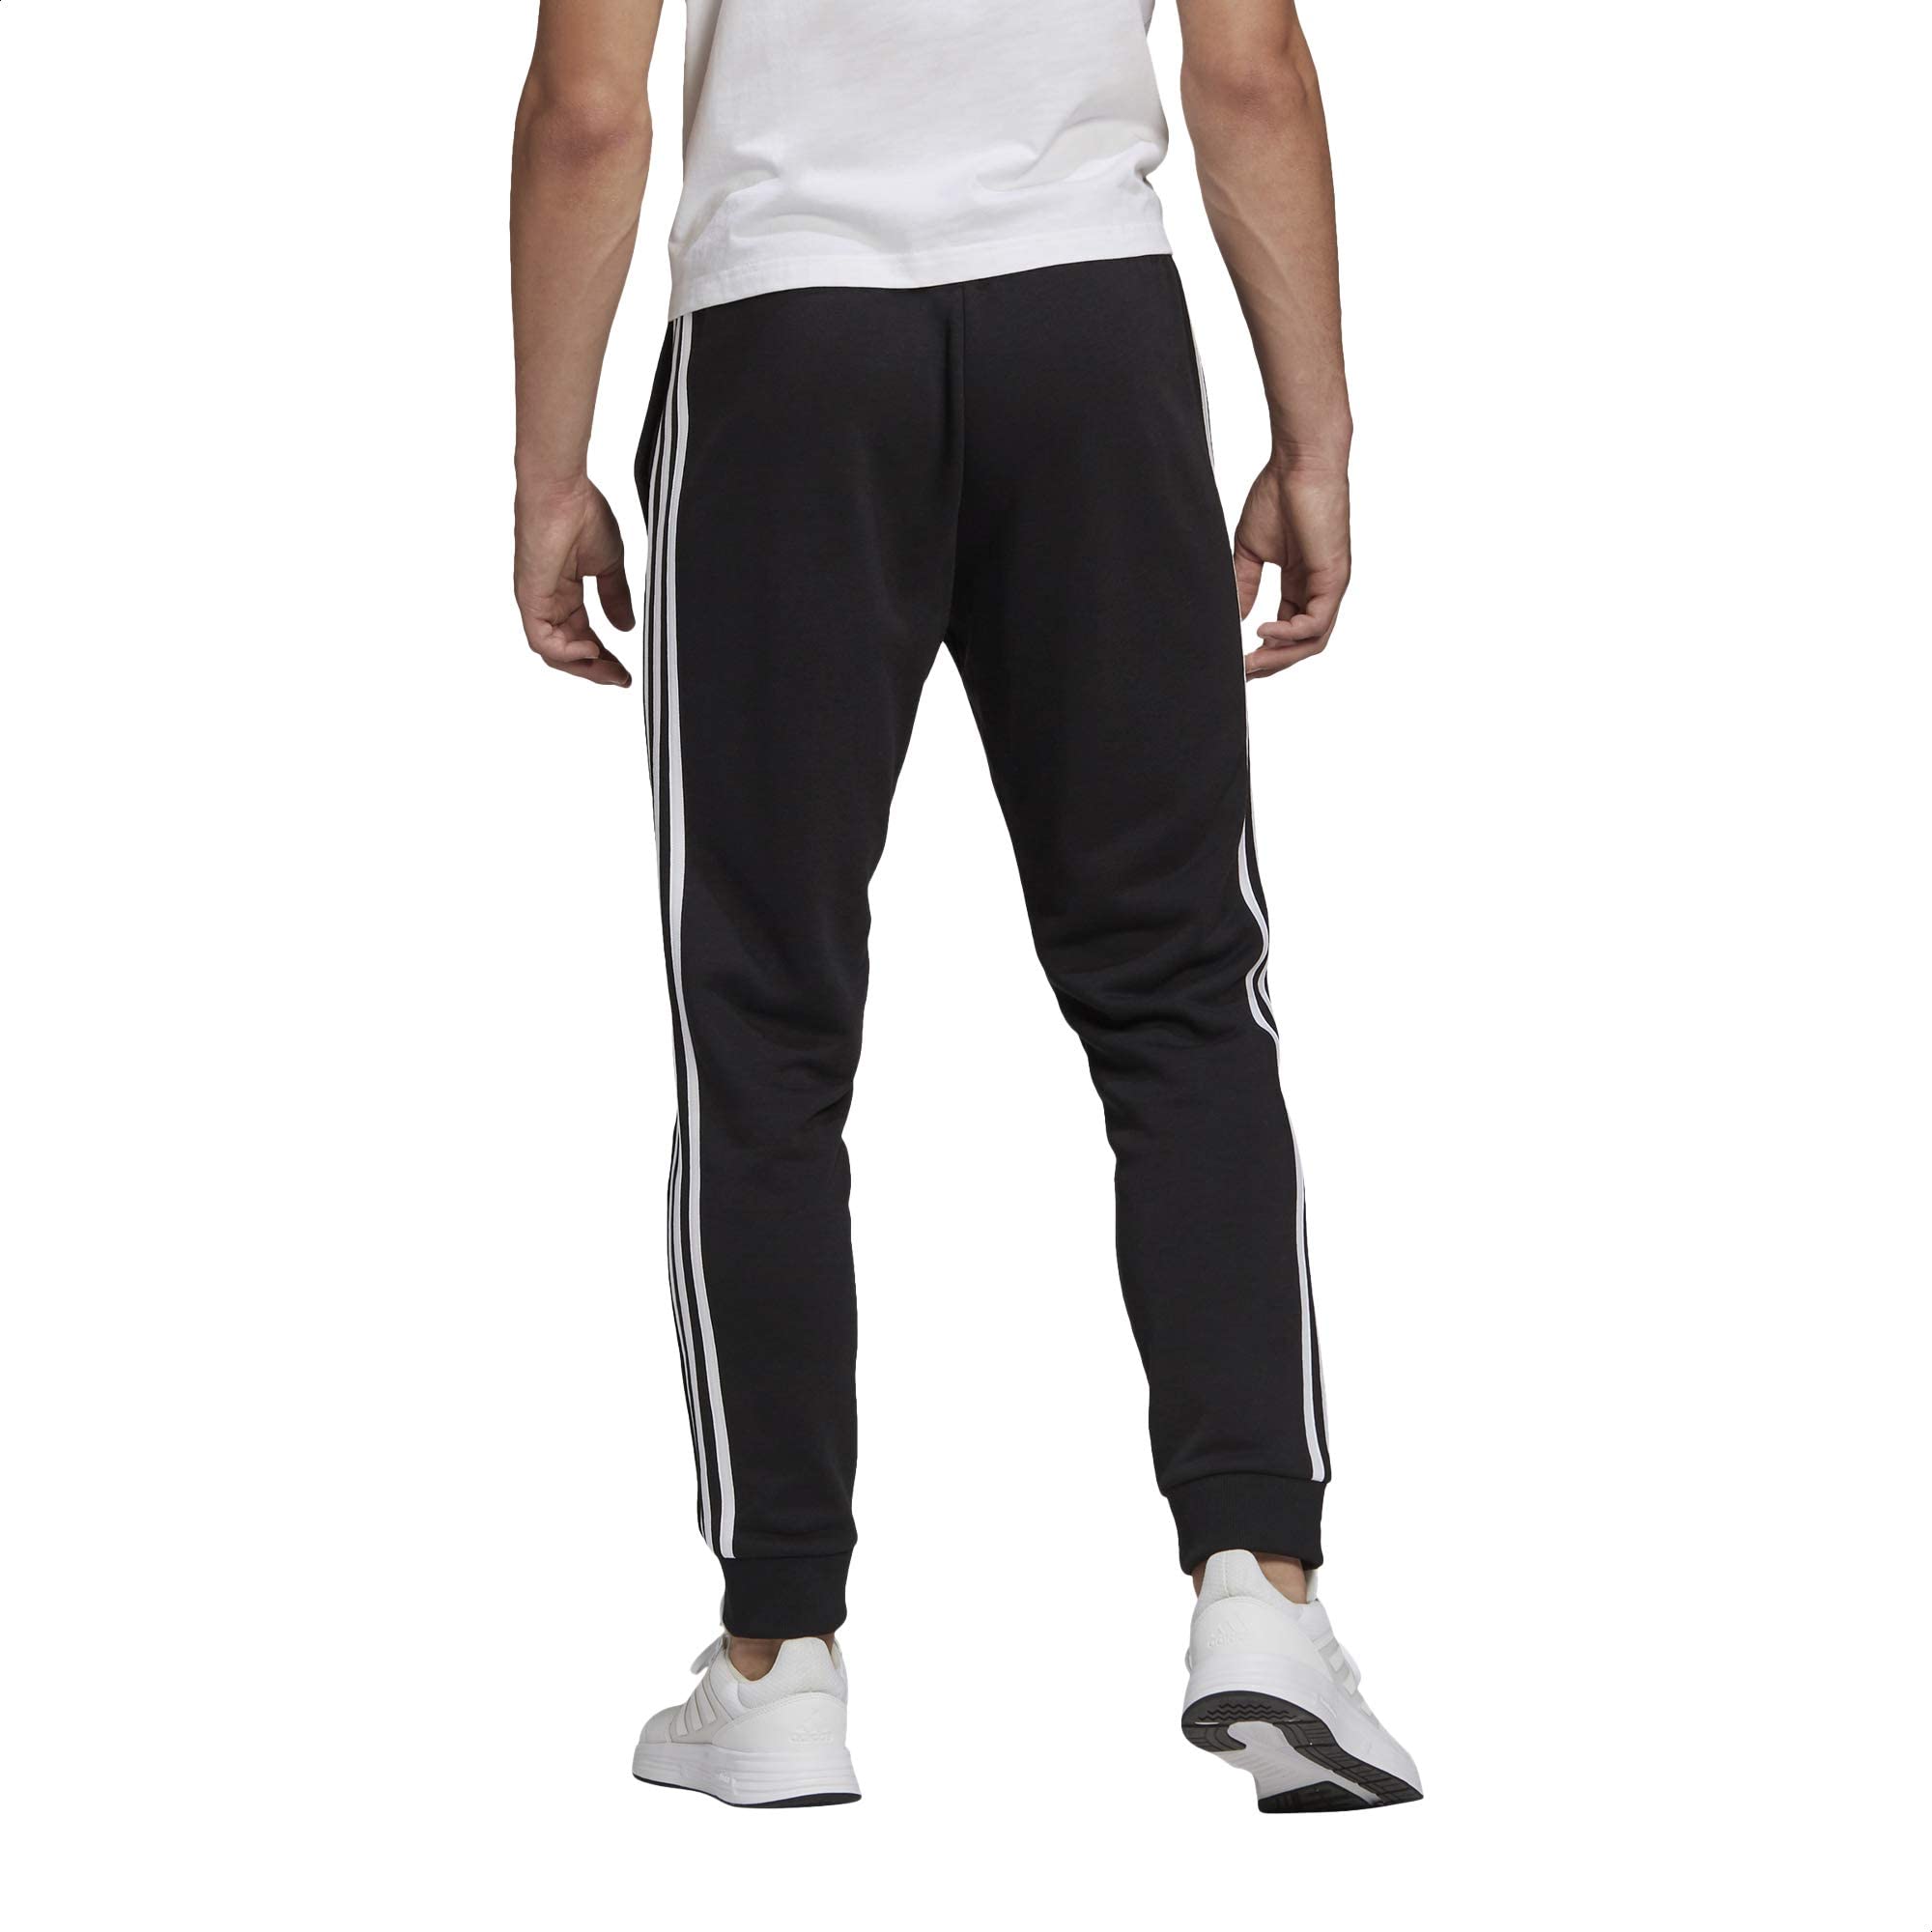 Adidas Men's M 3s Ft Tc Pt Pants Black